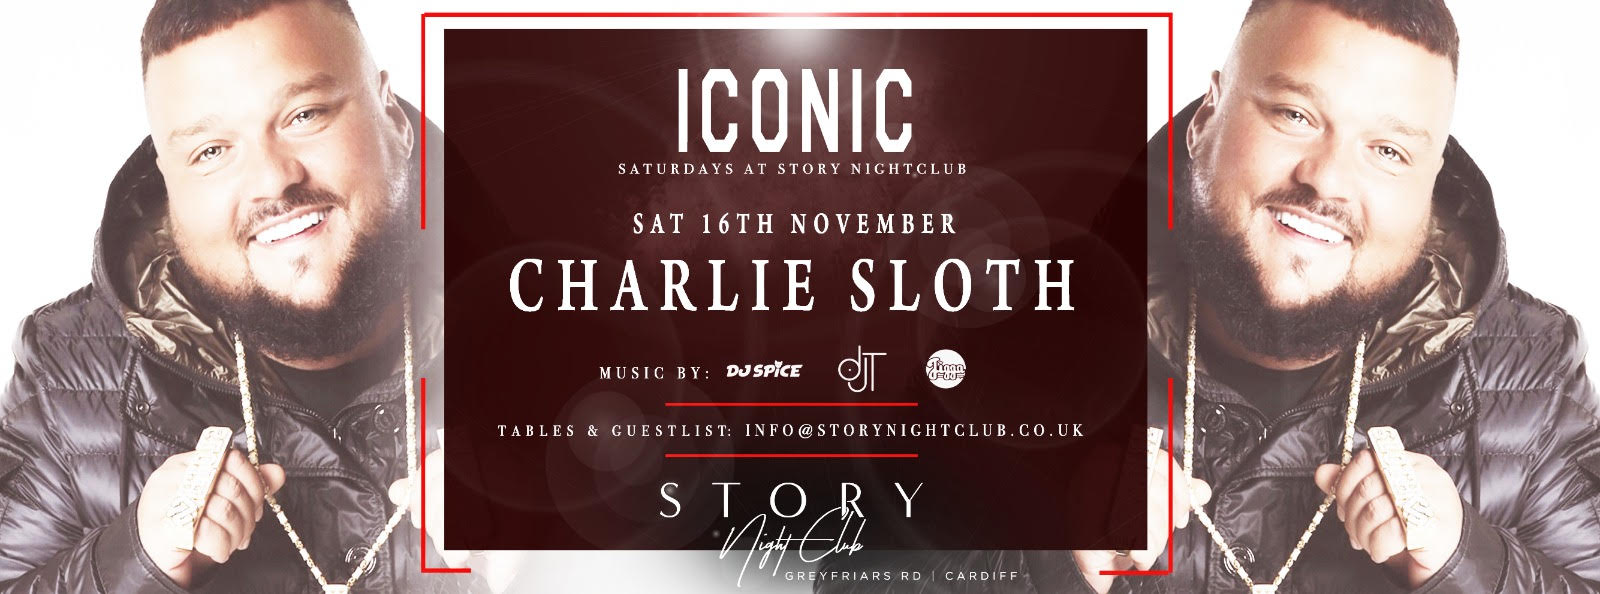 Iconic Presents Charlie Sloth At Story Nightclub Cardiff On 16th Nov 2019 Fatsoma 